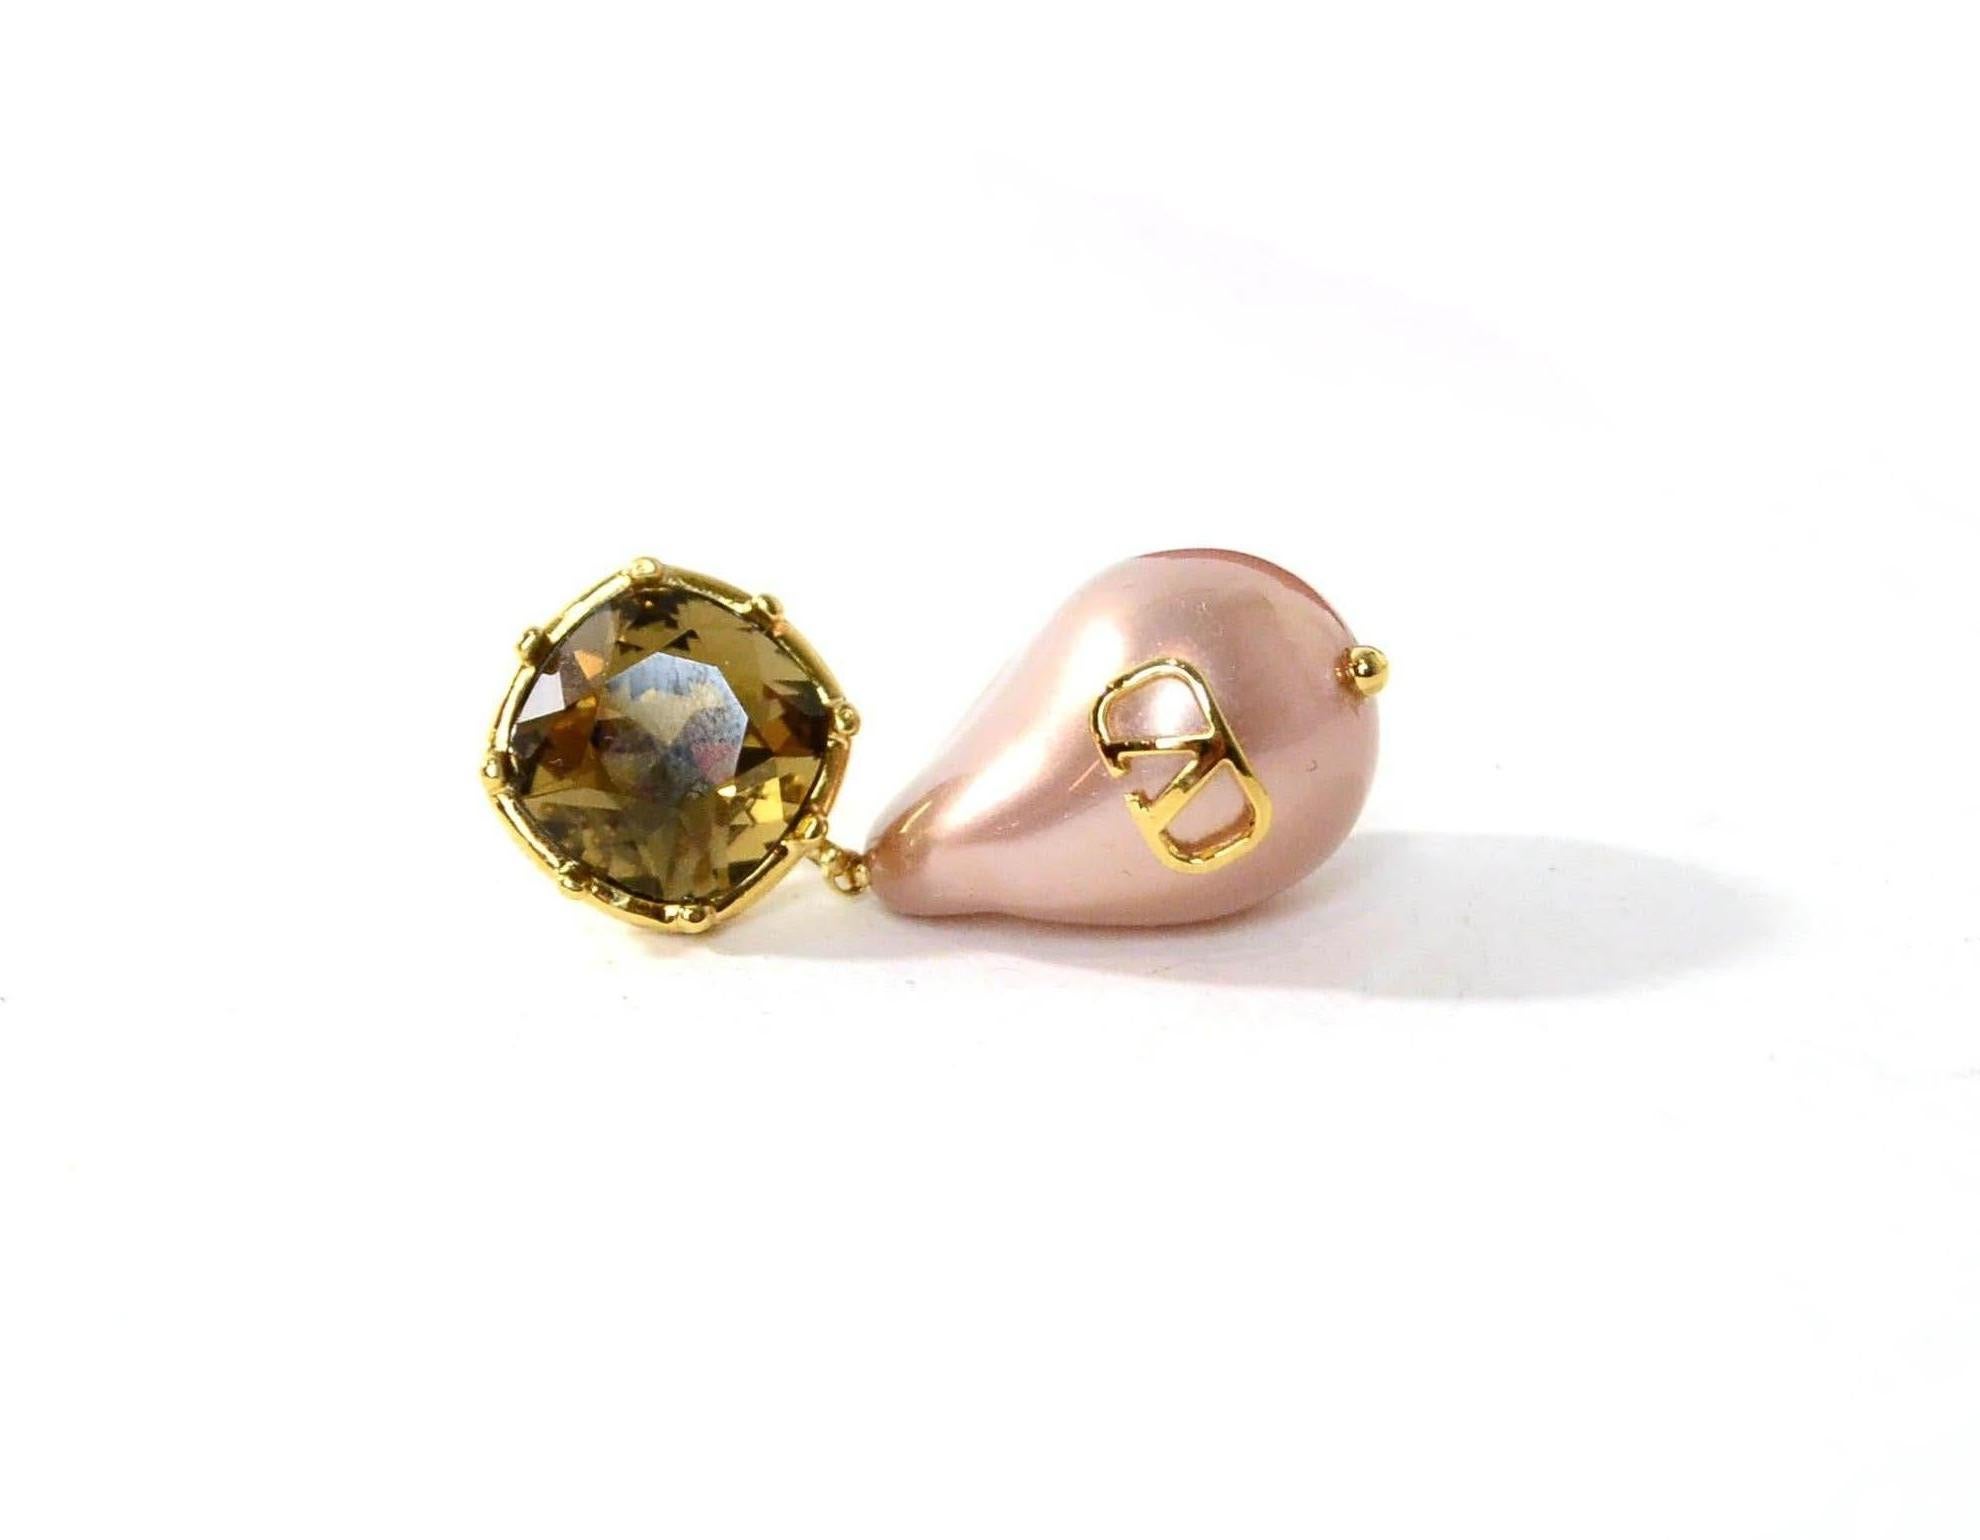 valentino pearl earrings